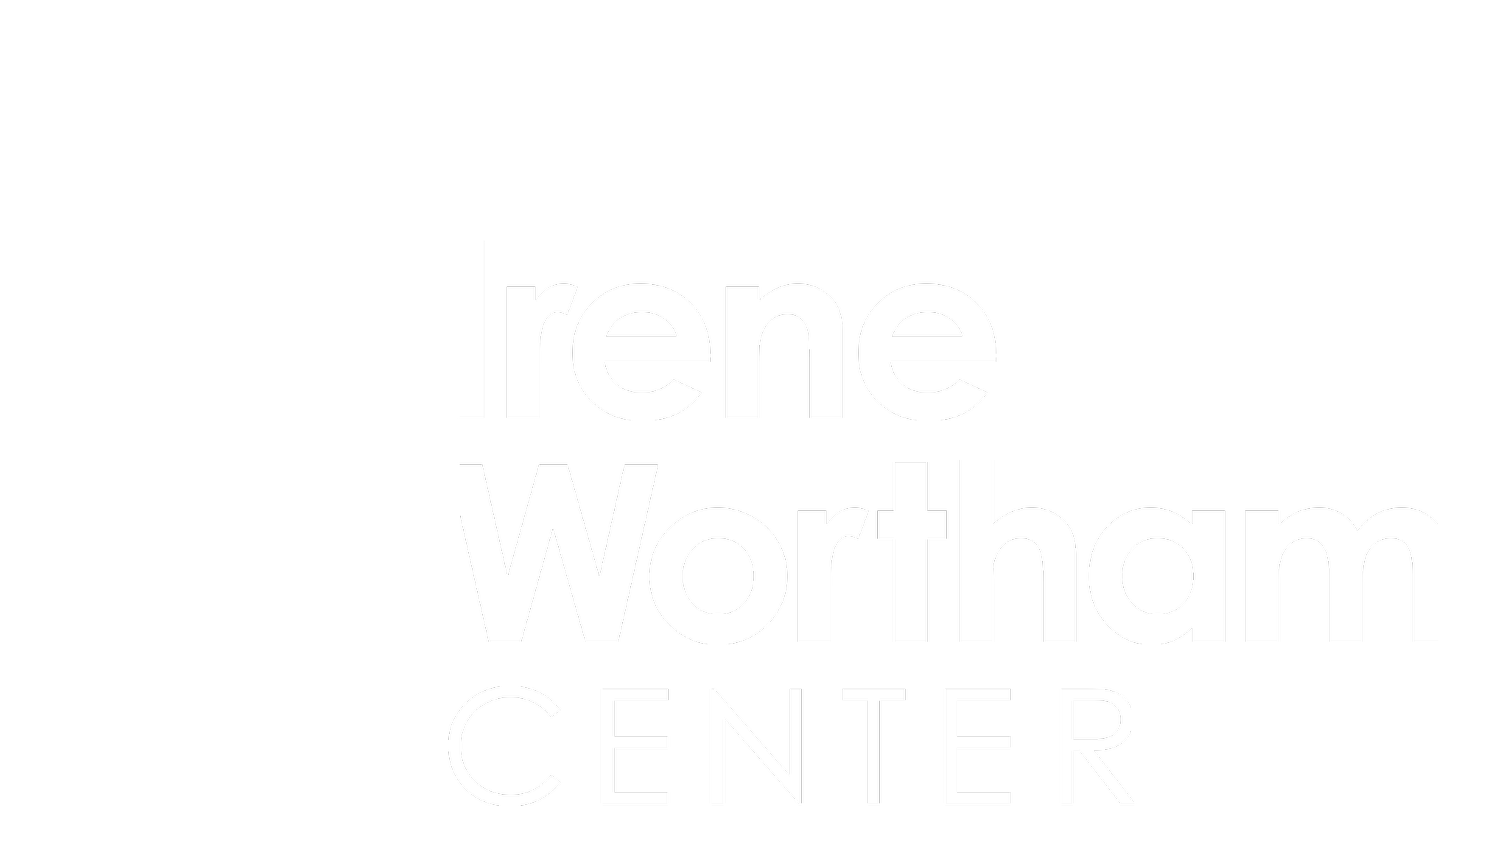 Irene Wortham Center